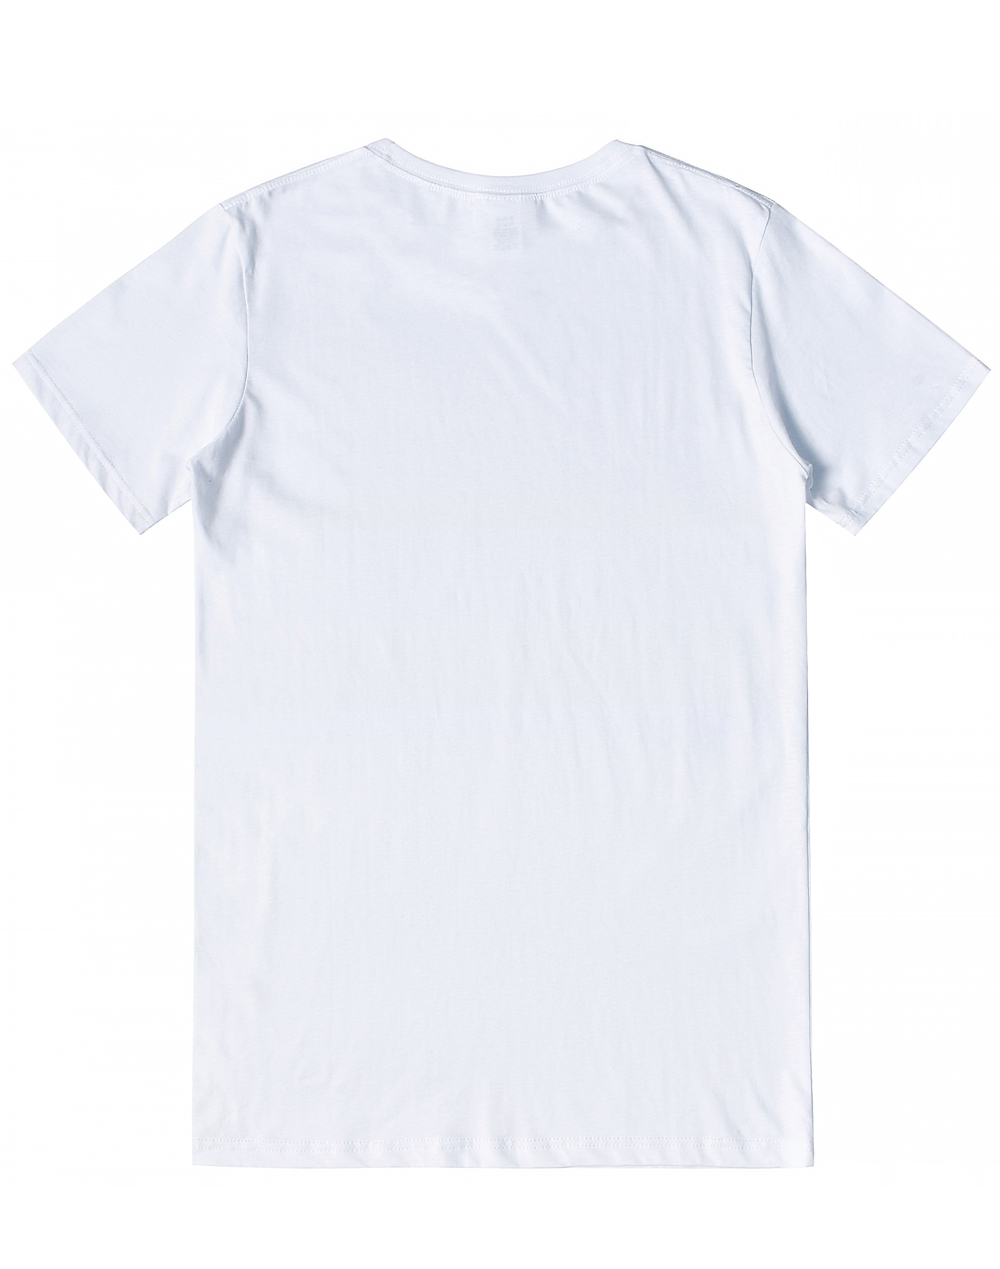 Custom Printed Premium T-Shirts Men's (White) Online in Perth Australia